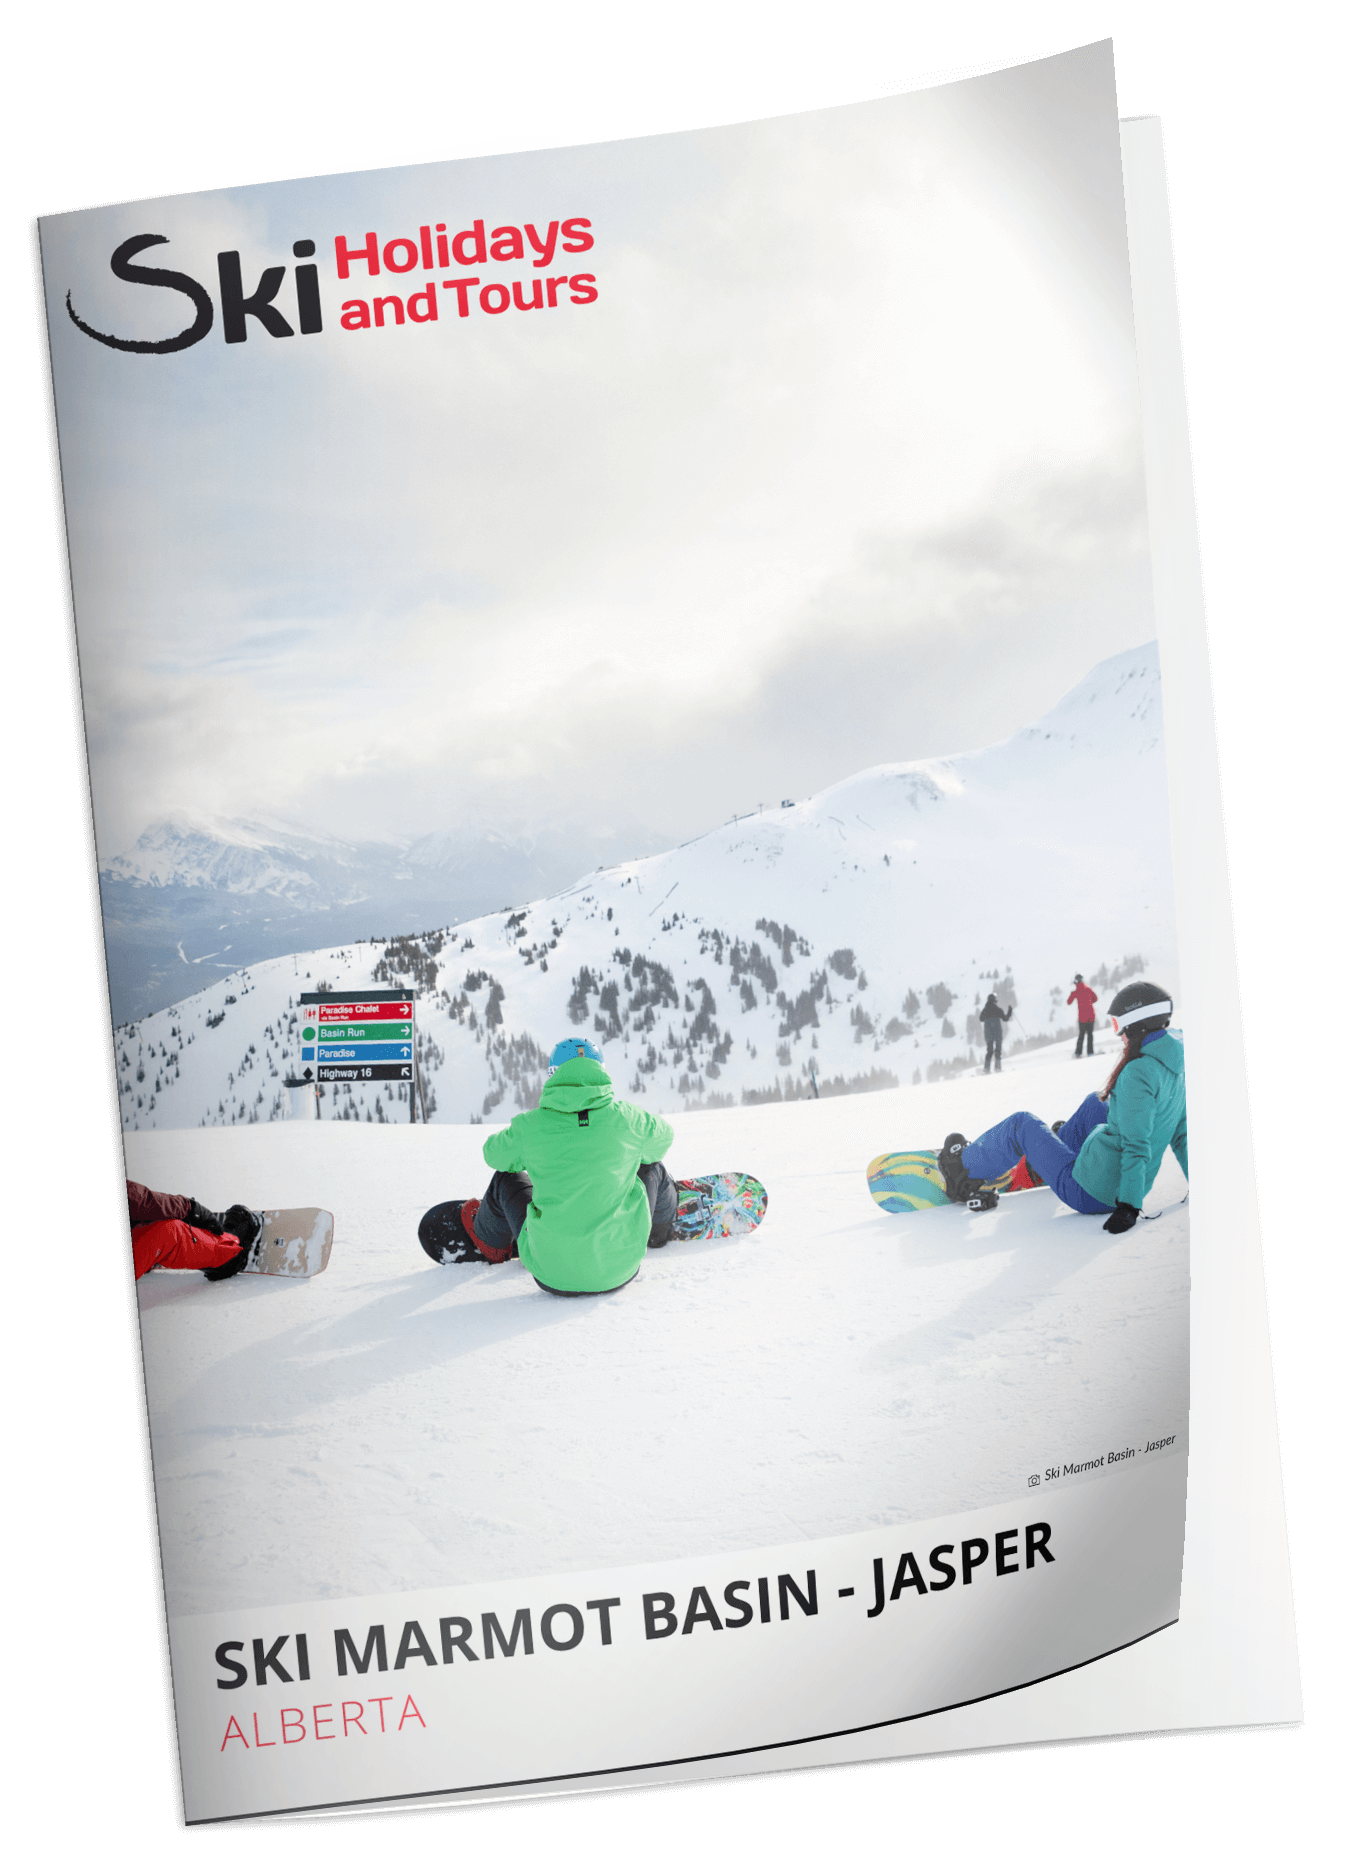 Ski Marmot Basin - Jasper